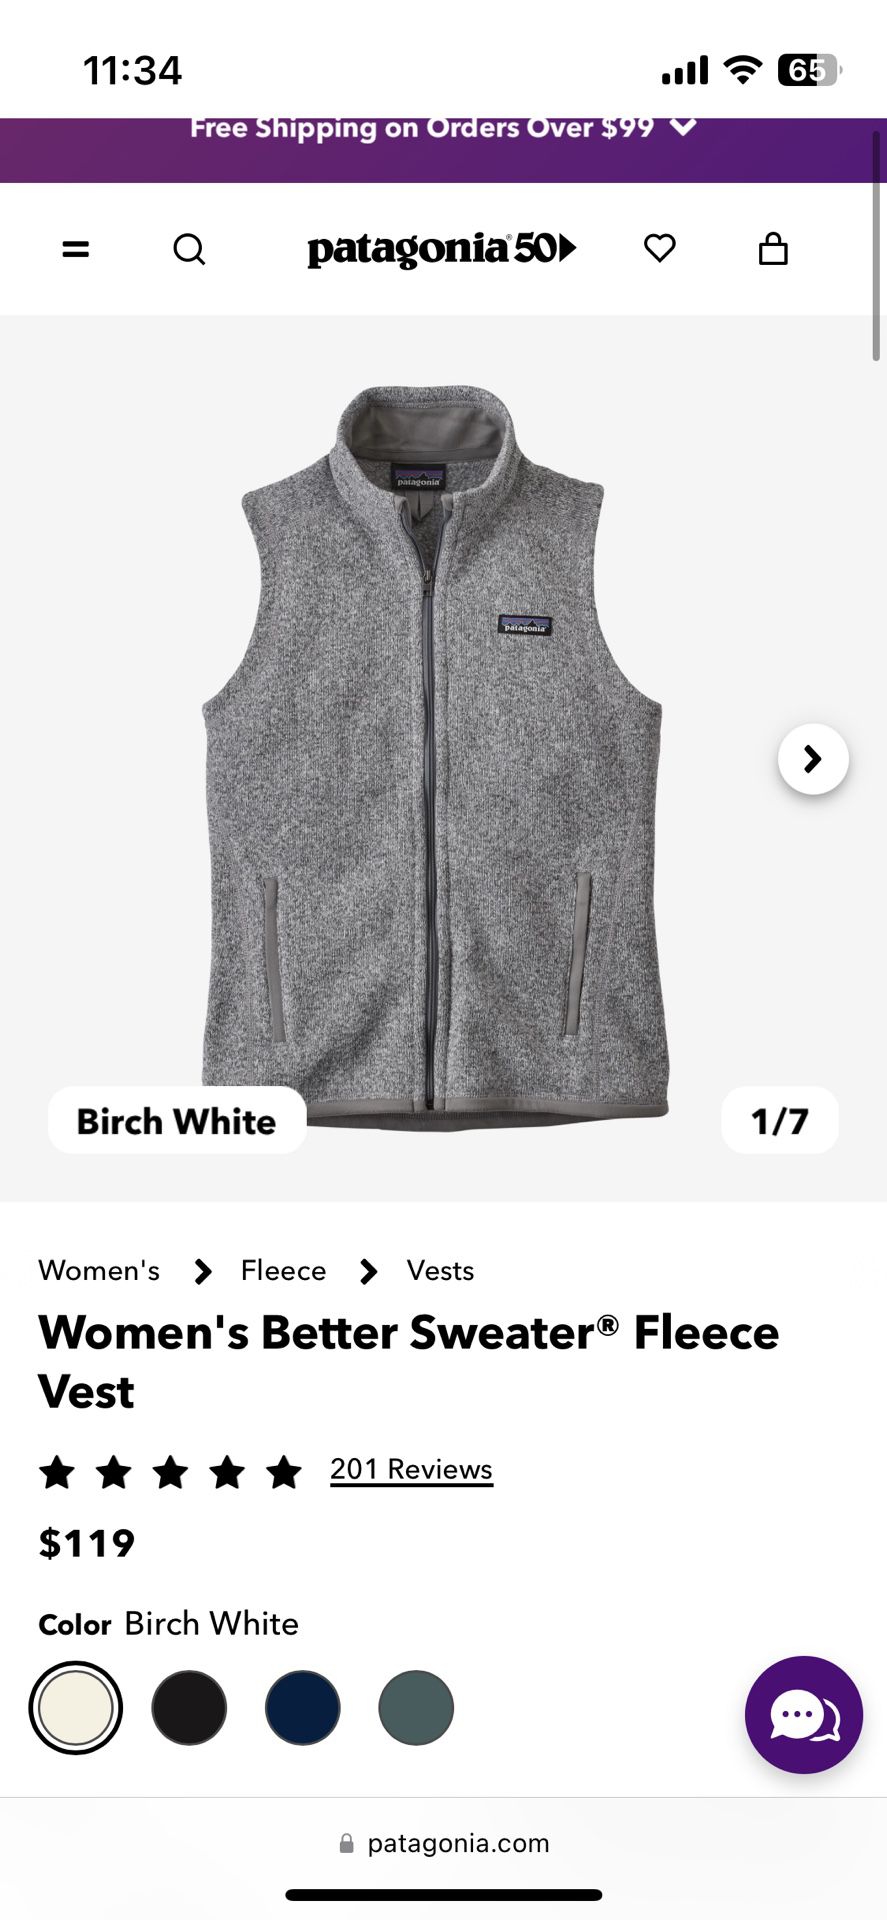 Patagonia Woman’s Better Sweater Fleece Vest